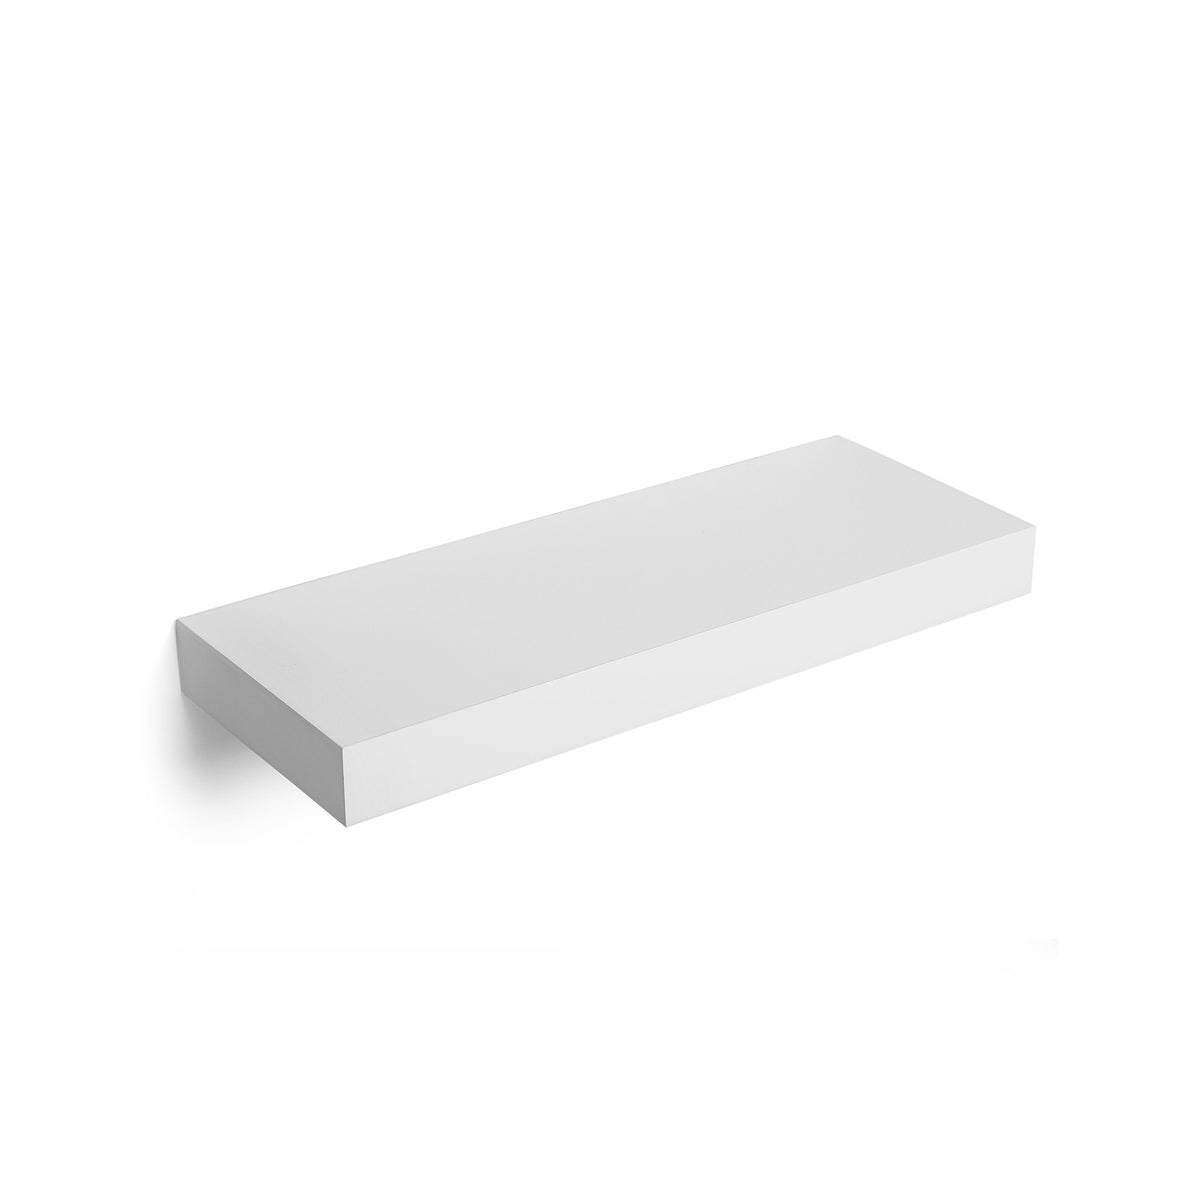 Minimalist Floating Shelves Set of 2 White Floating Shelves No Drill Shelf  Using Adhesive Wall Mounted White Shelves 